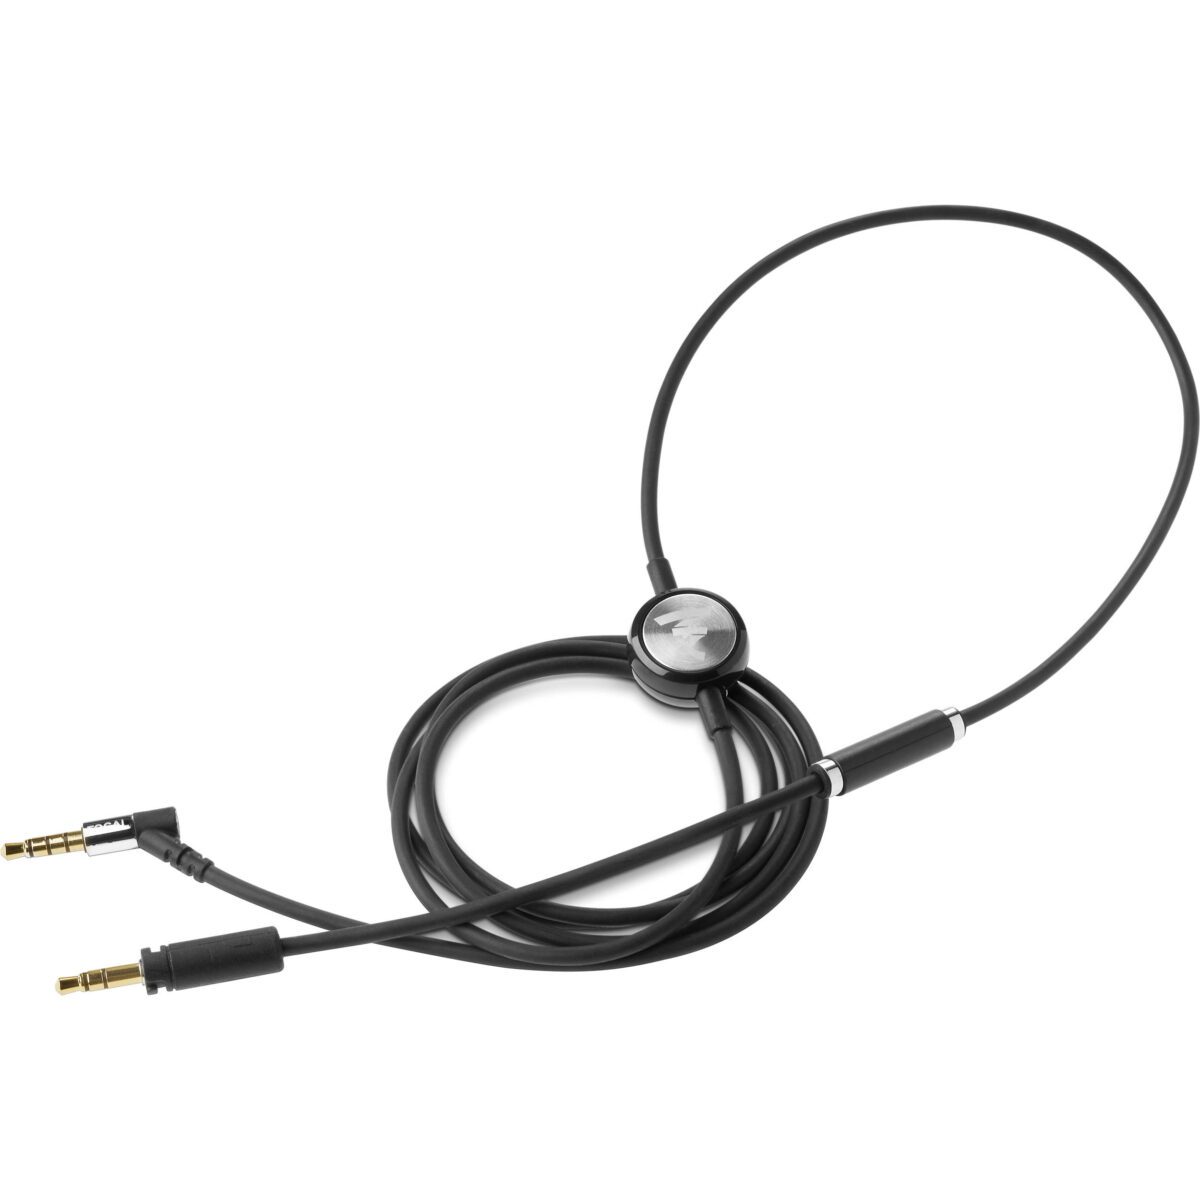 Focal Listen Professional Closed-Back Studio Monitor Headphones